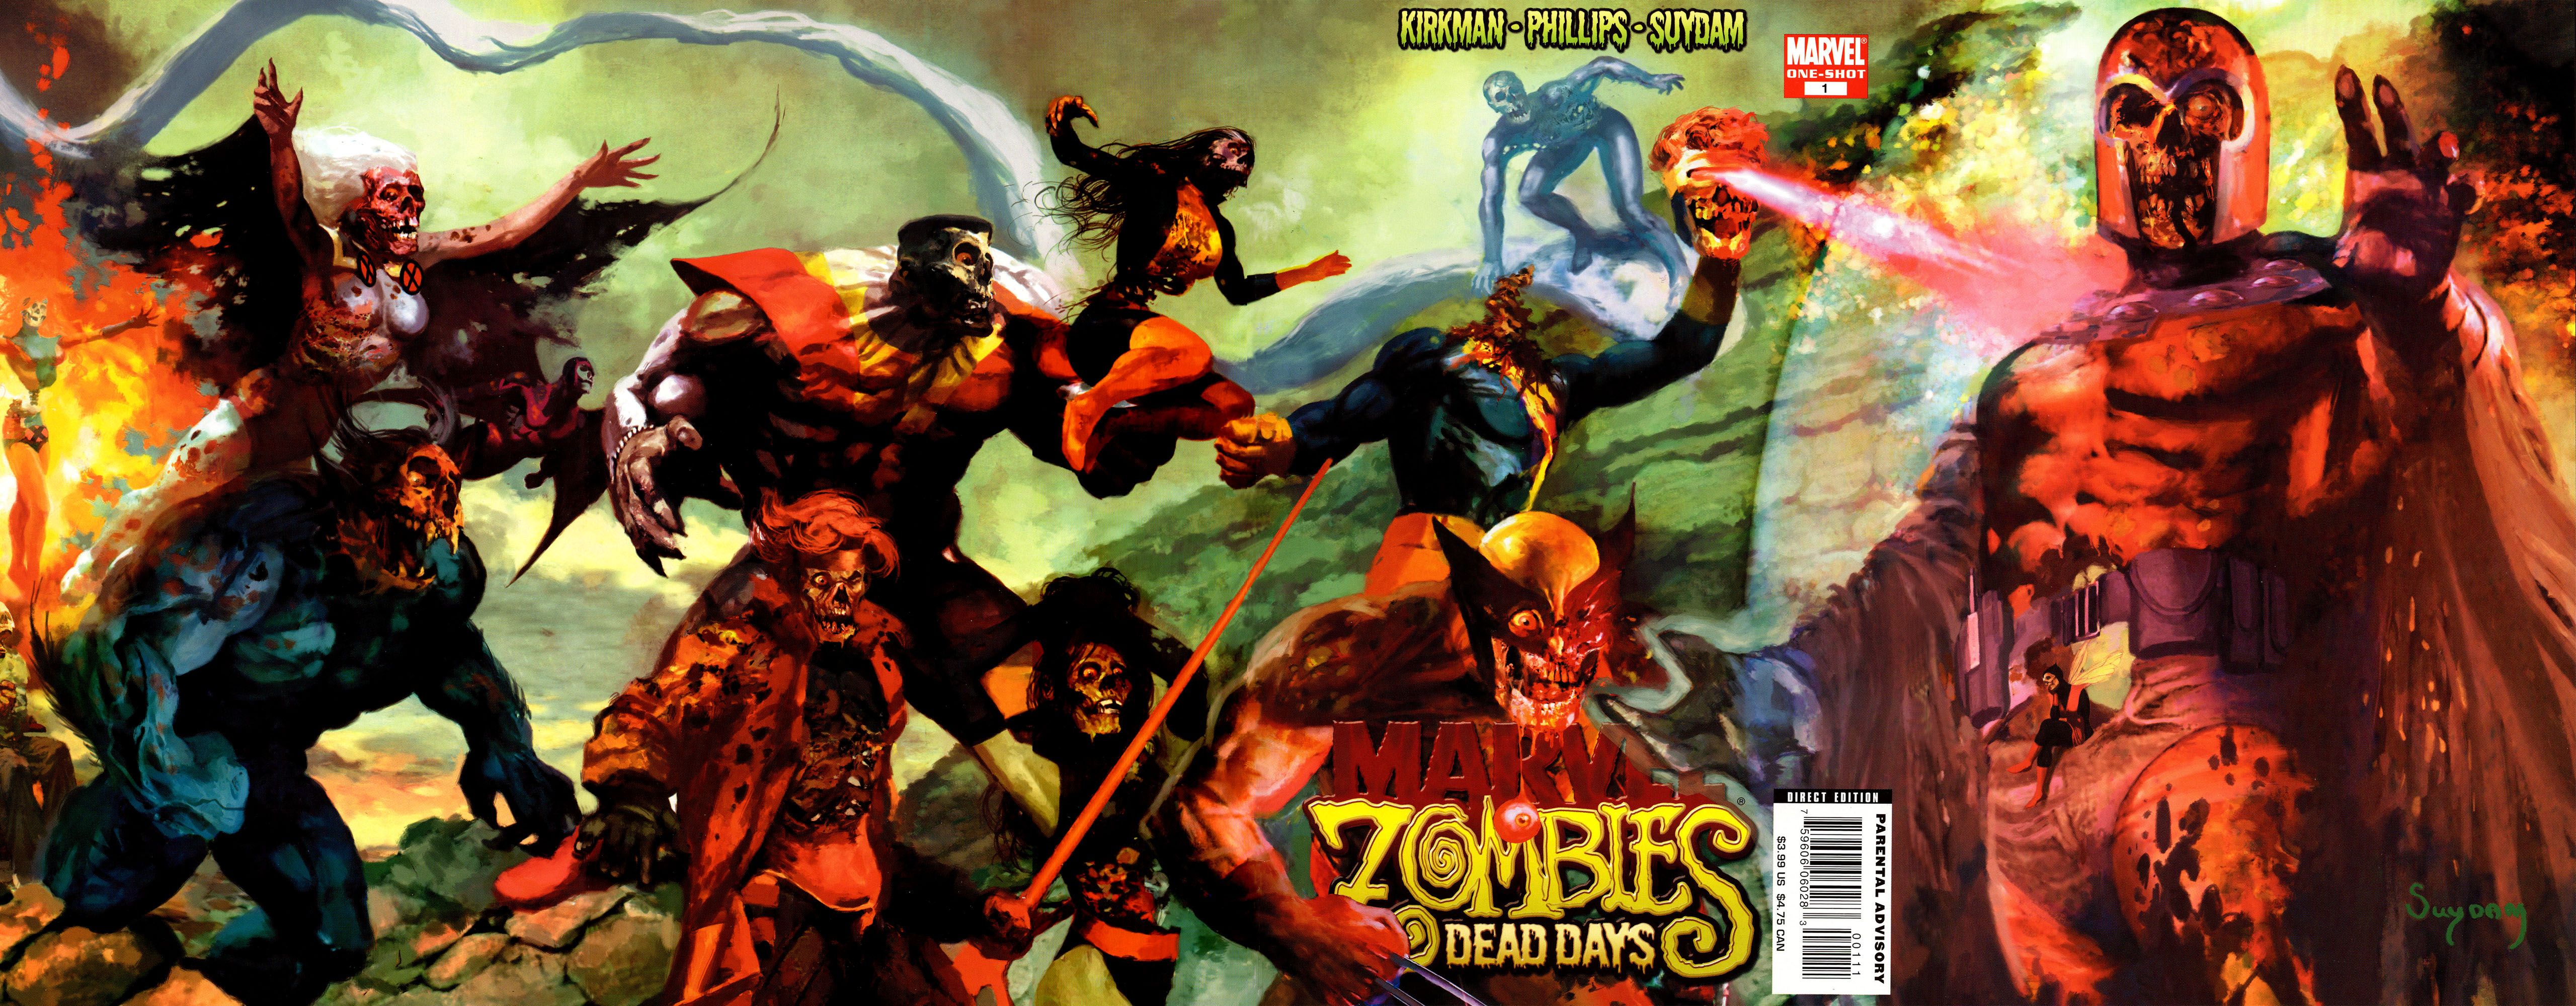 Marvel Zombies: Dead Days Full HD Wallpaper